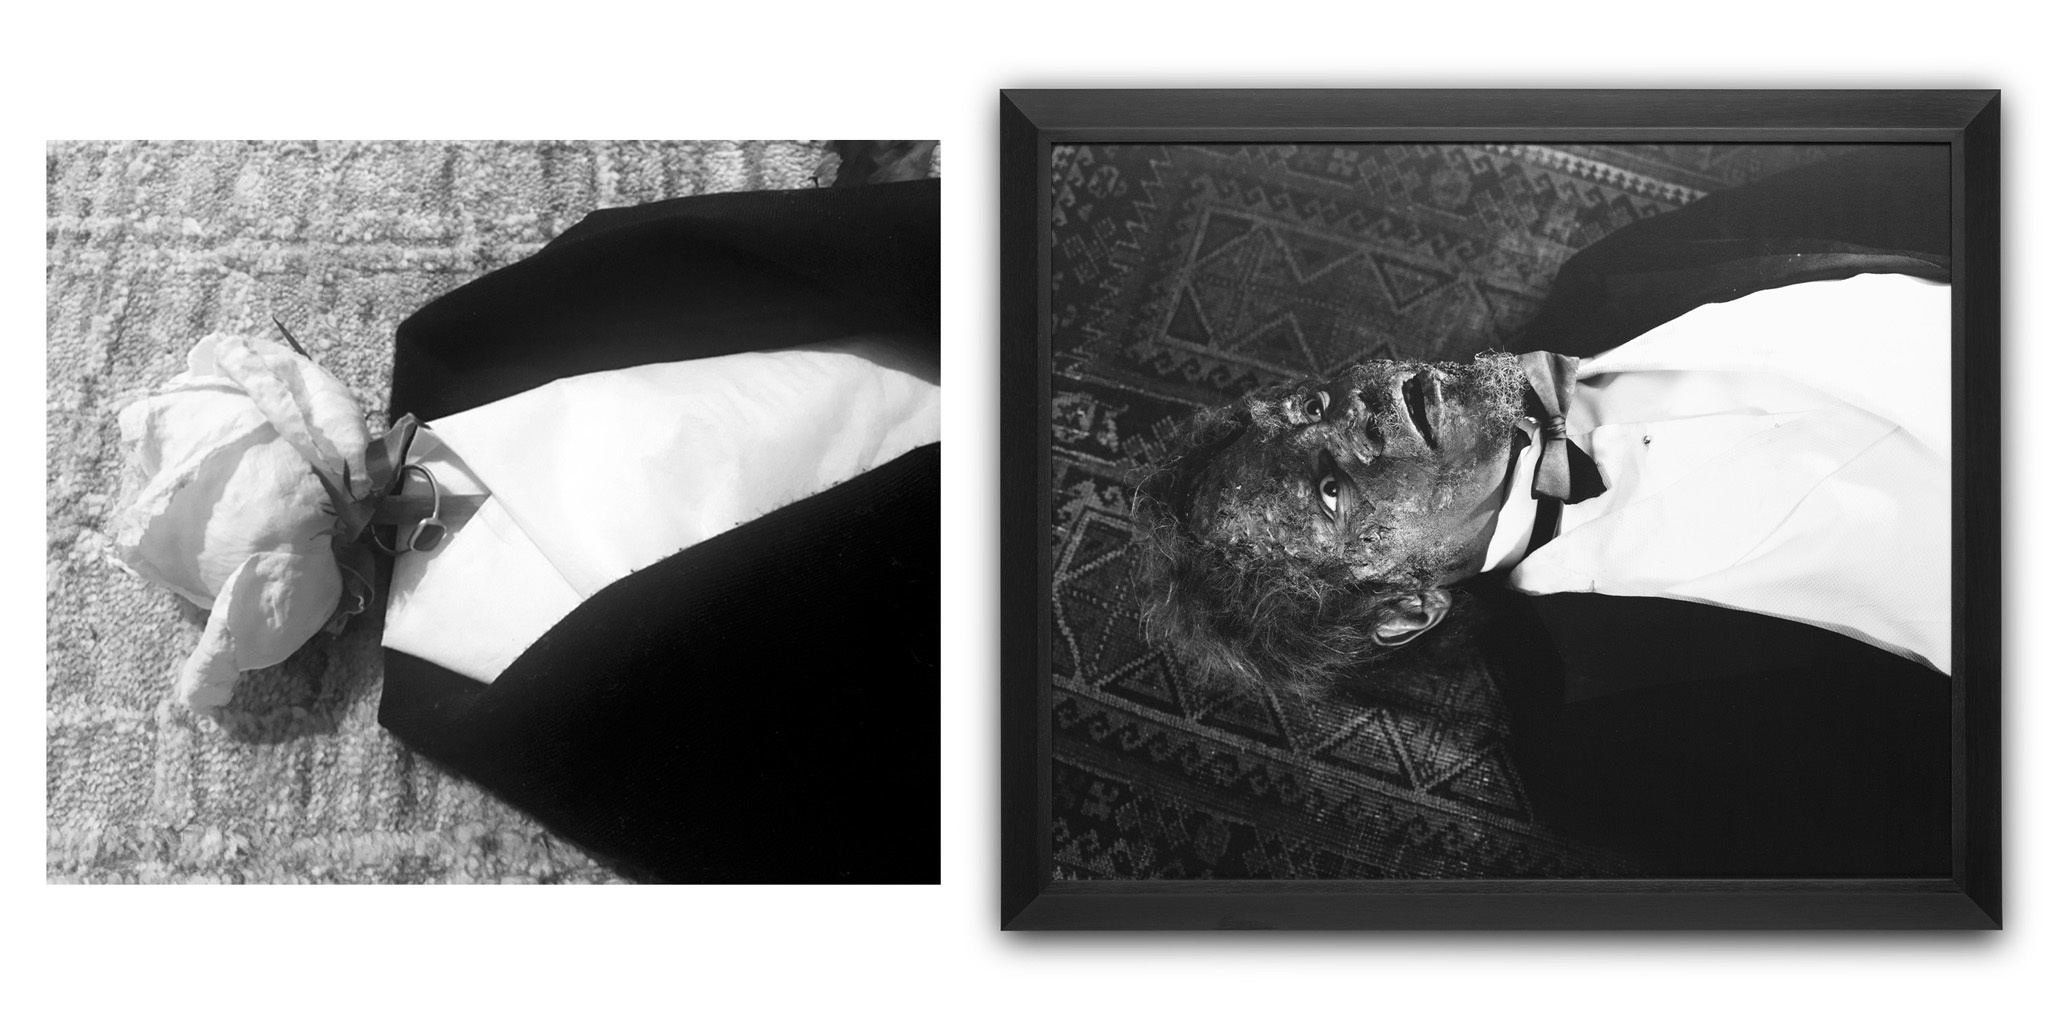 Irene Lian [on Yinka Shonibare's _Dorian Gray [scene 12]_, 2001, resin print,30 x 37 1/2 inches, The Jack Shear Collection of Photography, 2017.25l](https://tang.skidmore.edu/collection/artworks/970-dorian-gray-scene-12)